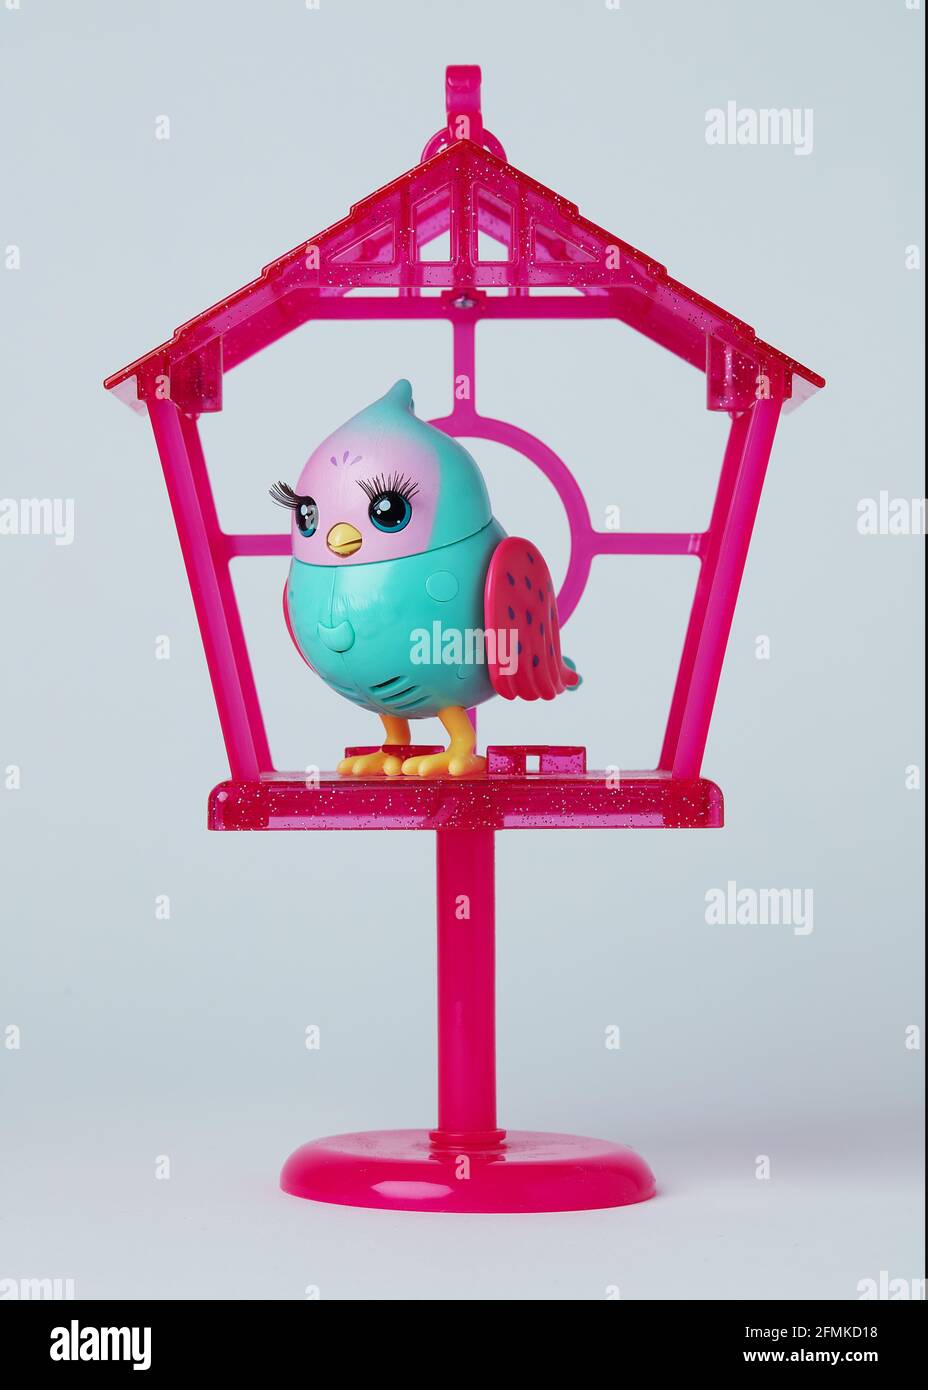 Singing bird toy in birdhouse Stock Photo